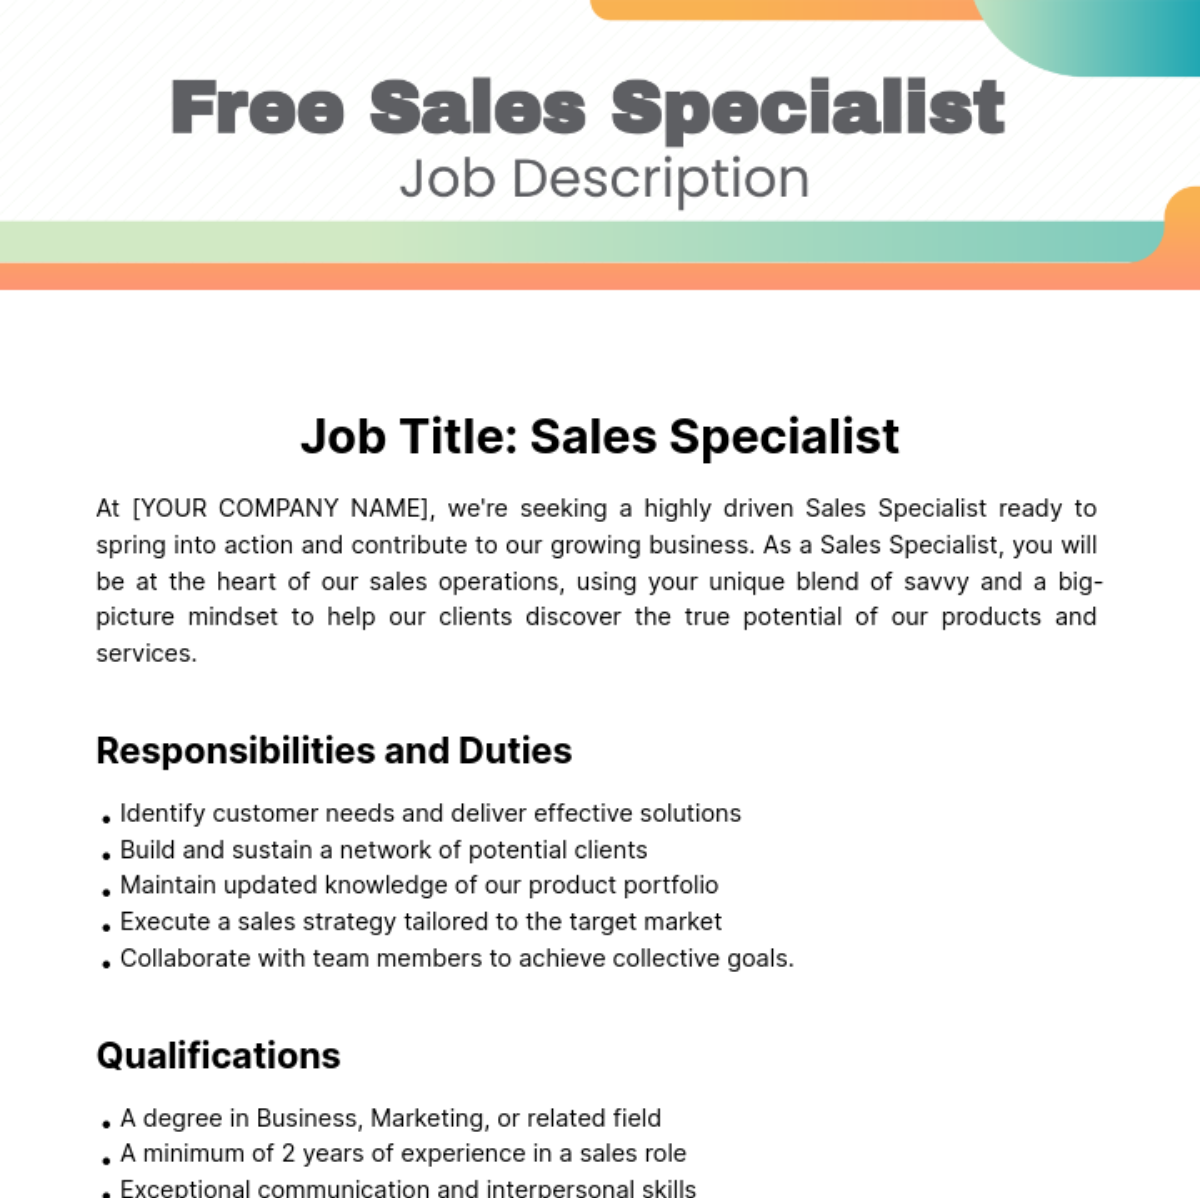 Free Sales Specialist Job Description Template